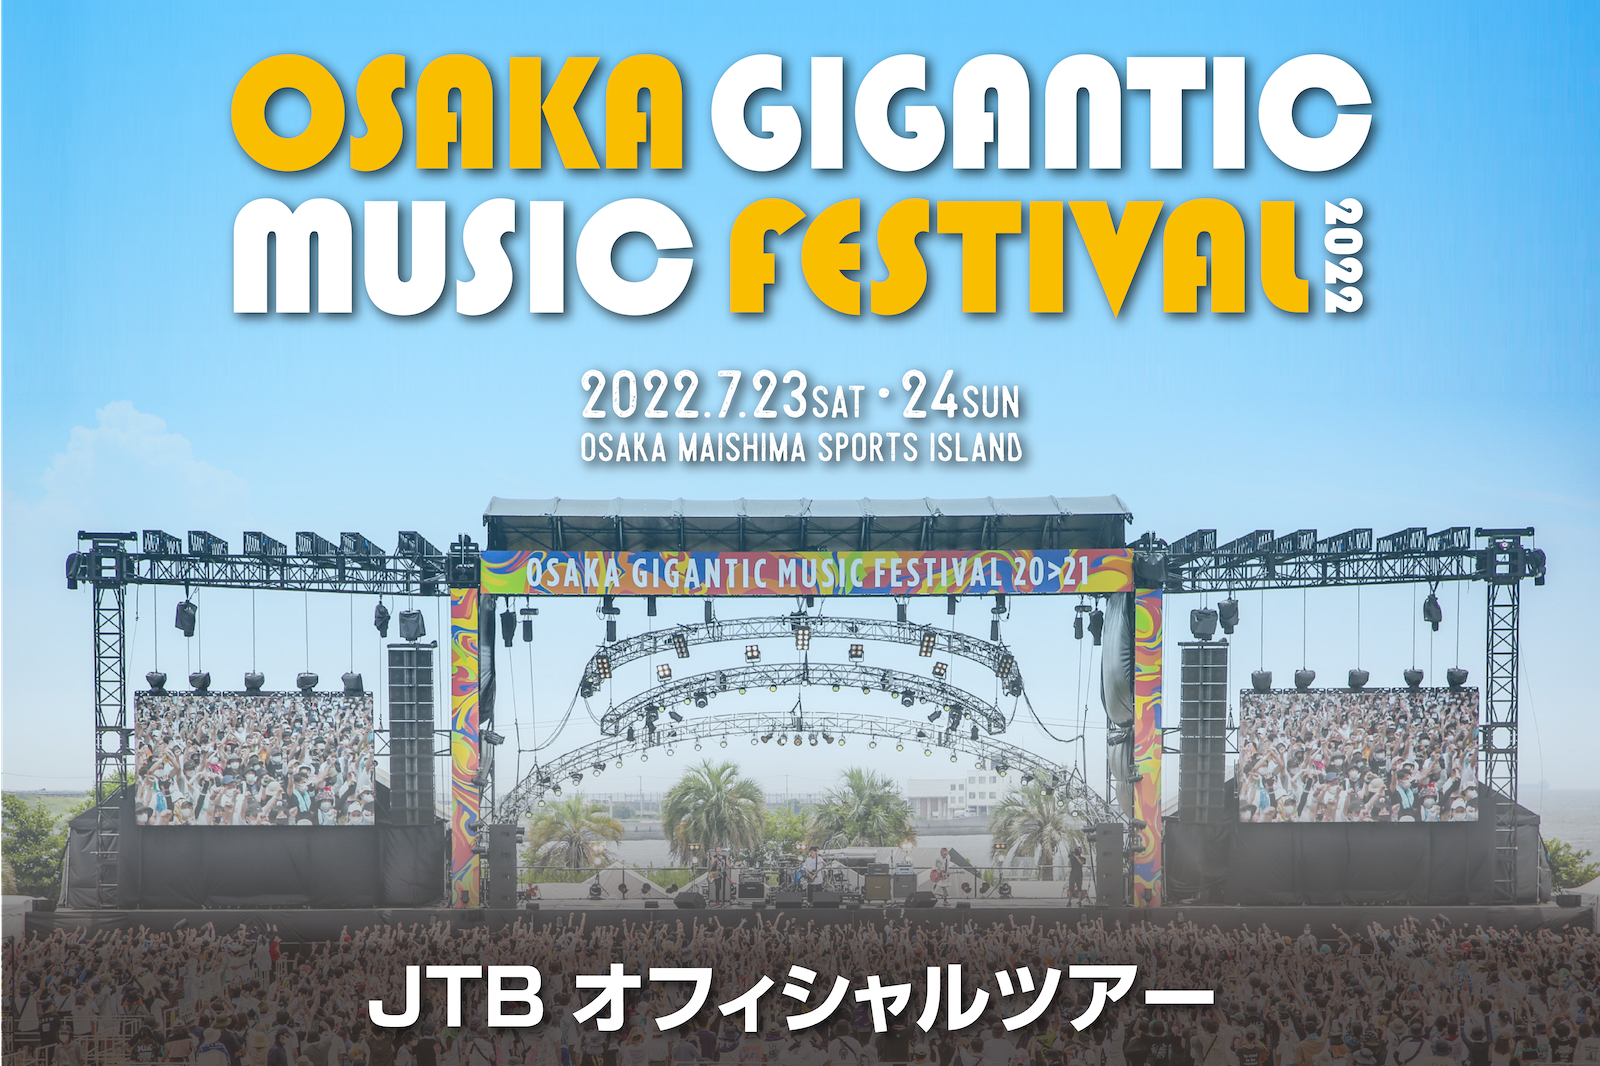 OSAKA GIGANTIC MUSIC FESTIVAL 2022 アクセスバスツアー